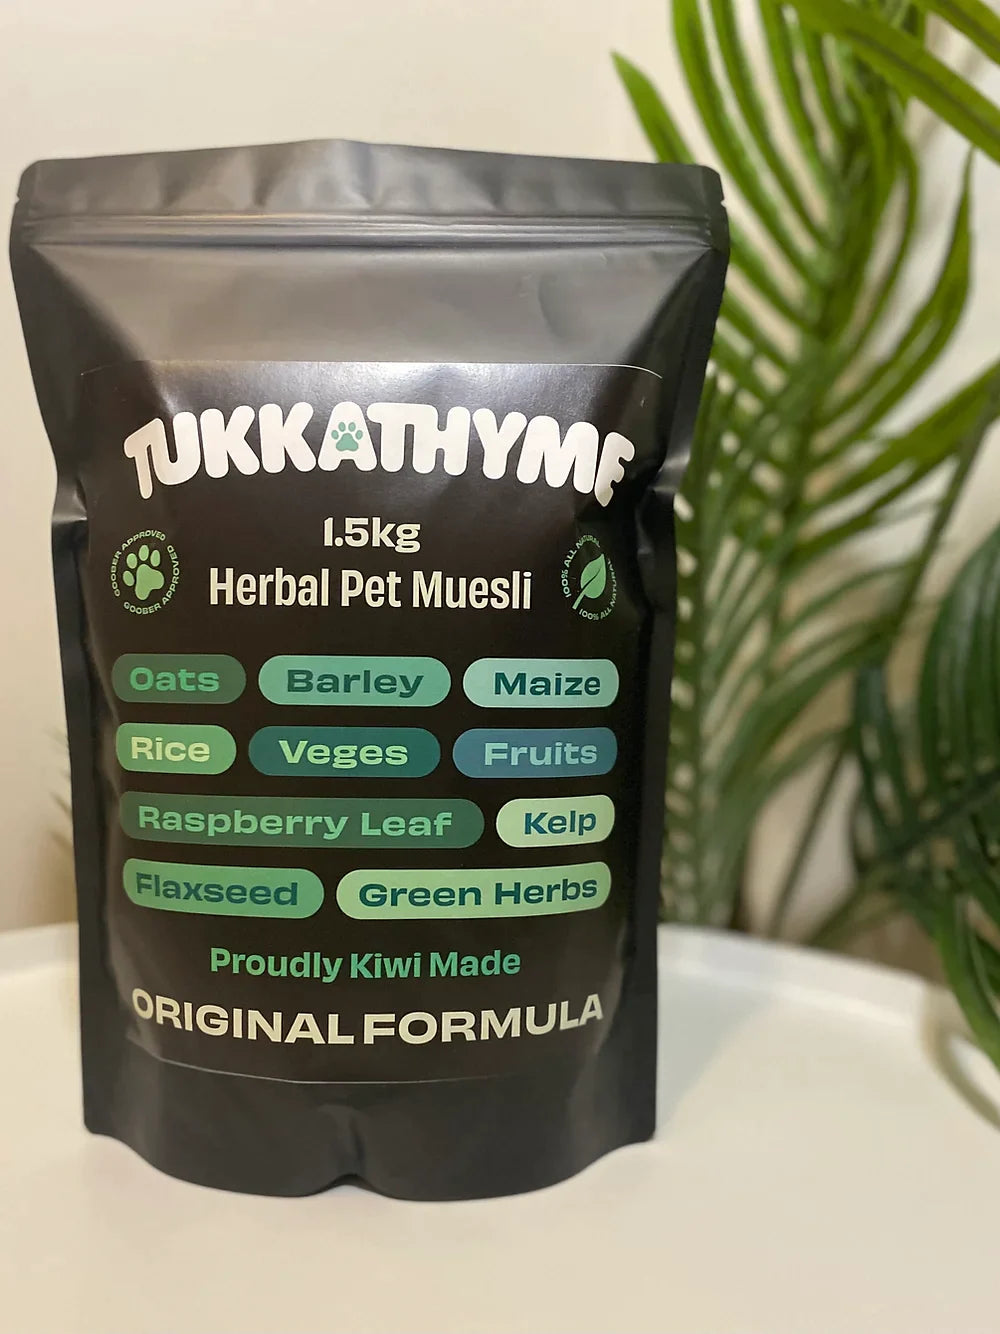 Tukkathyme: Herbal Muesli Original Formula